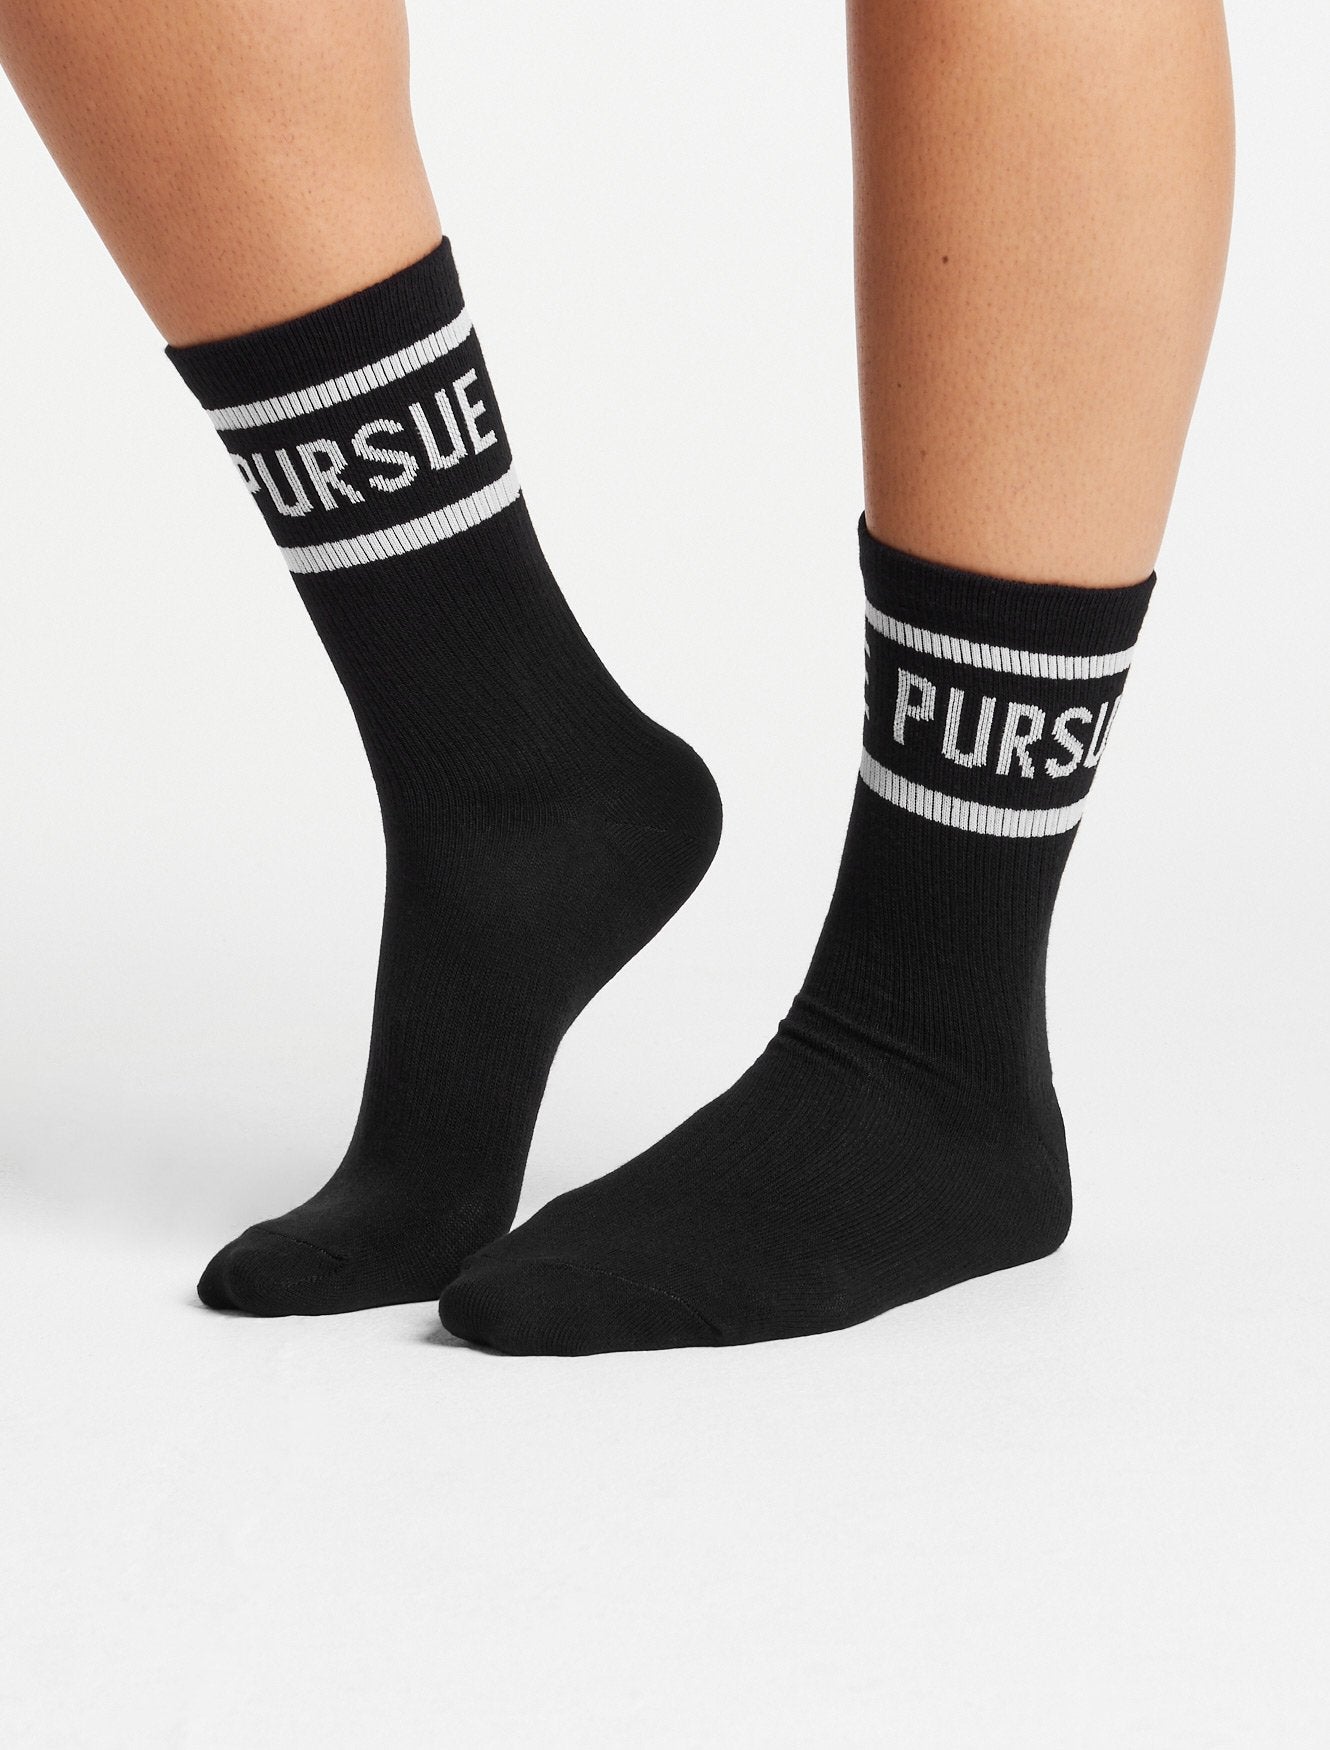 Crew Socks / Black (Unisex) Pursue Fitness 1